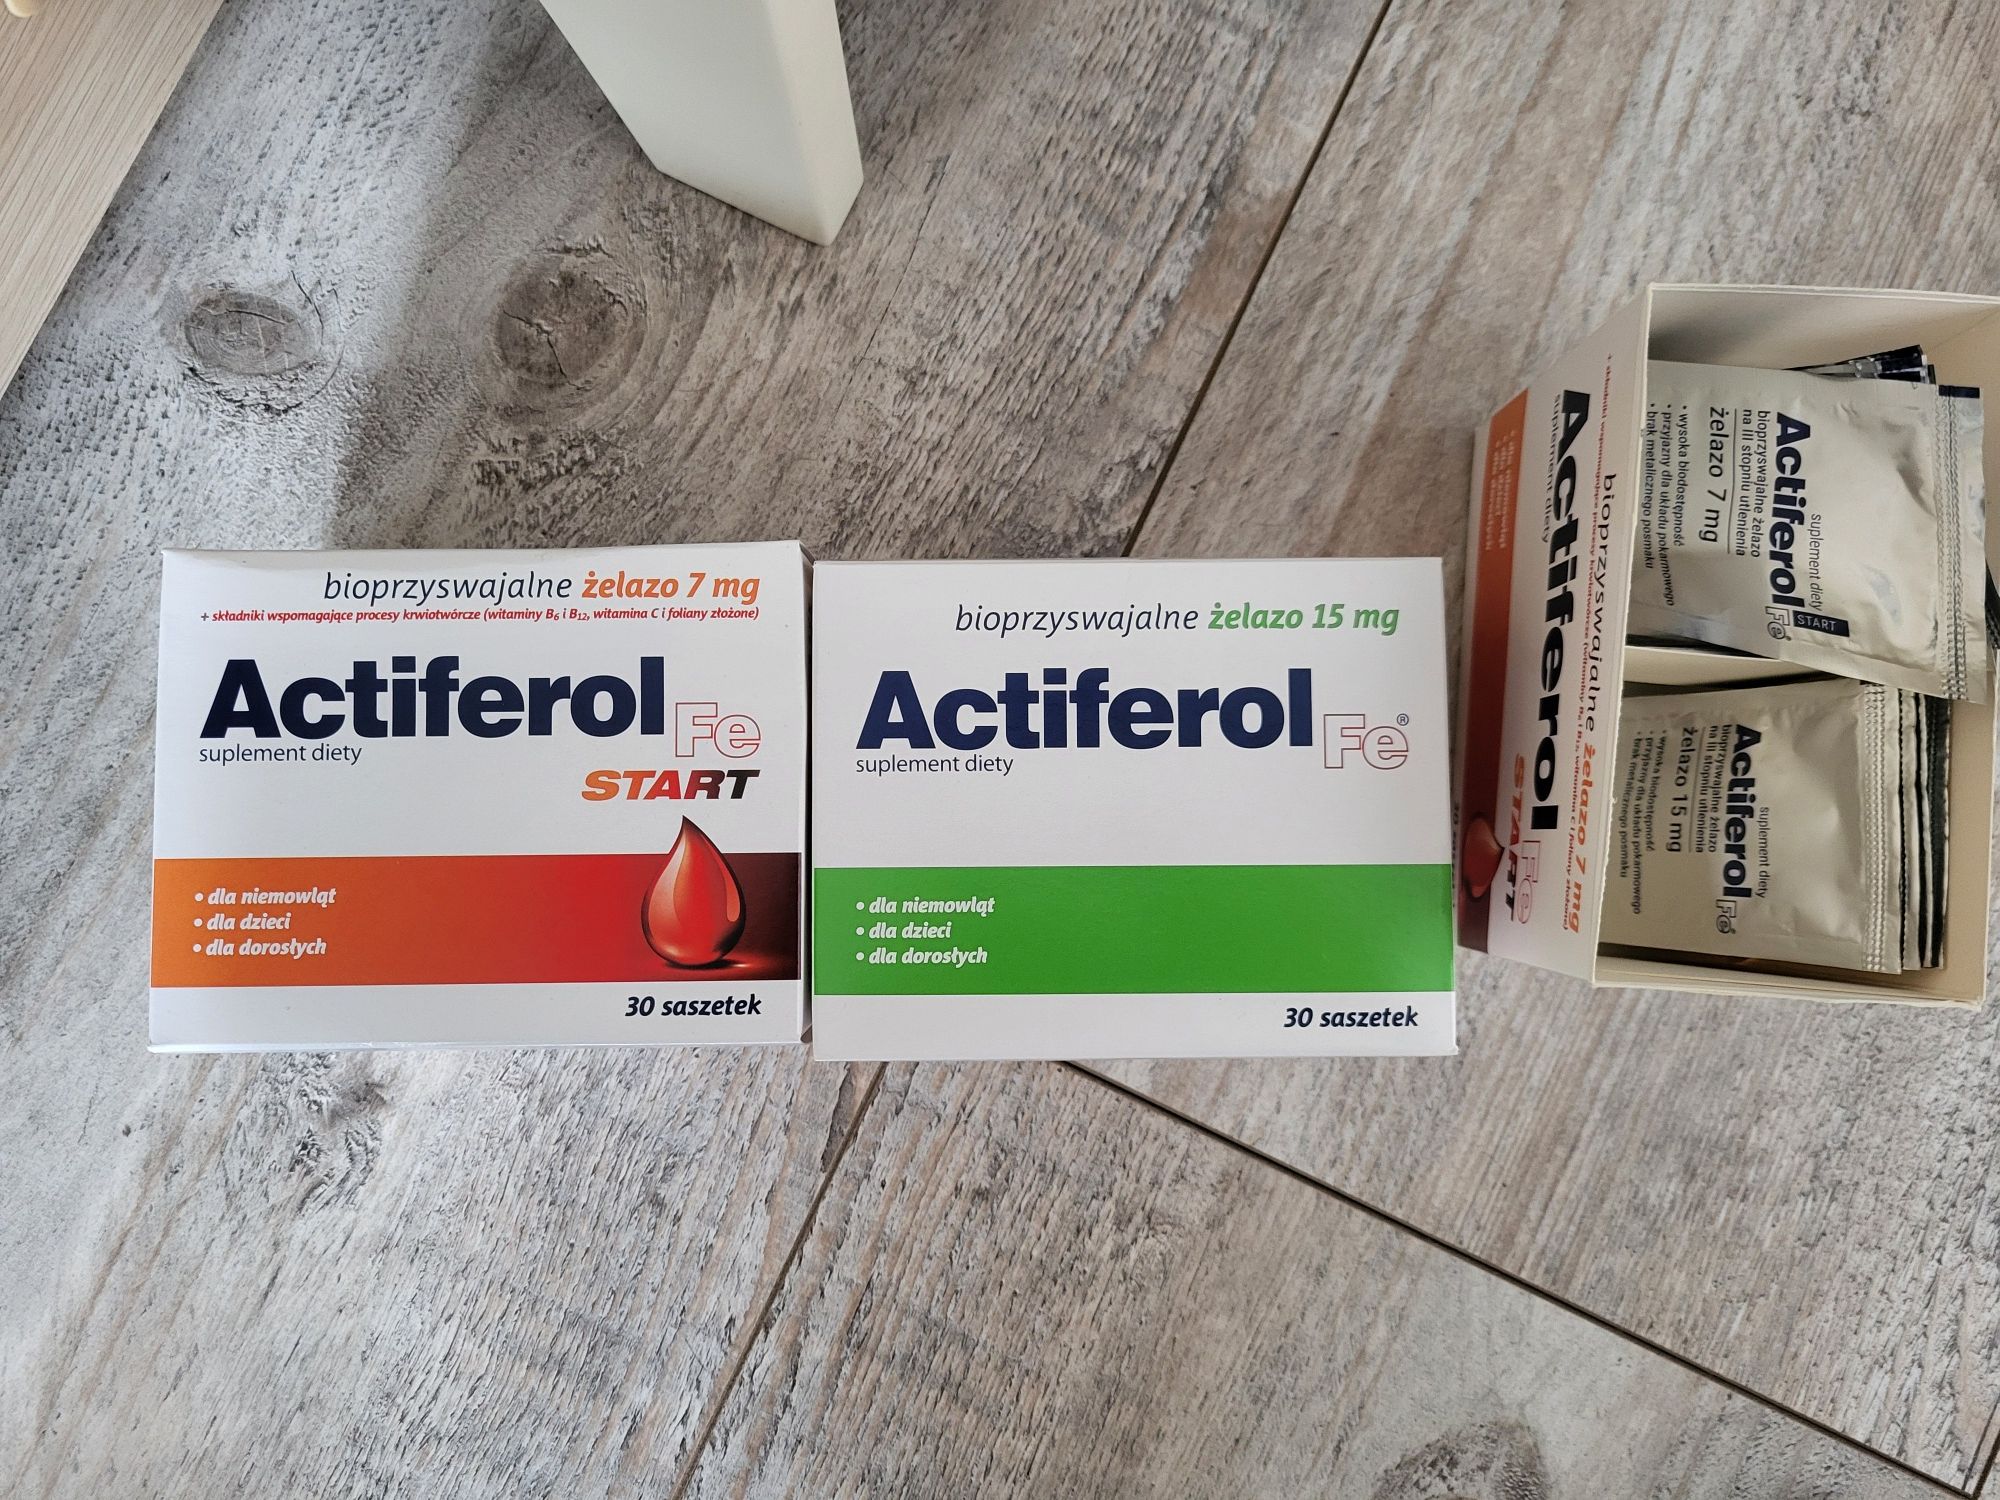 Actiferol start i actiferol 15